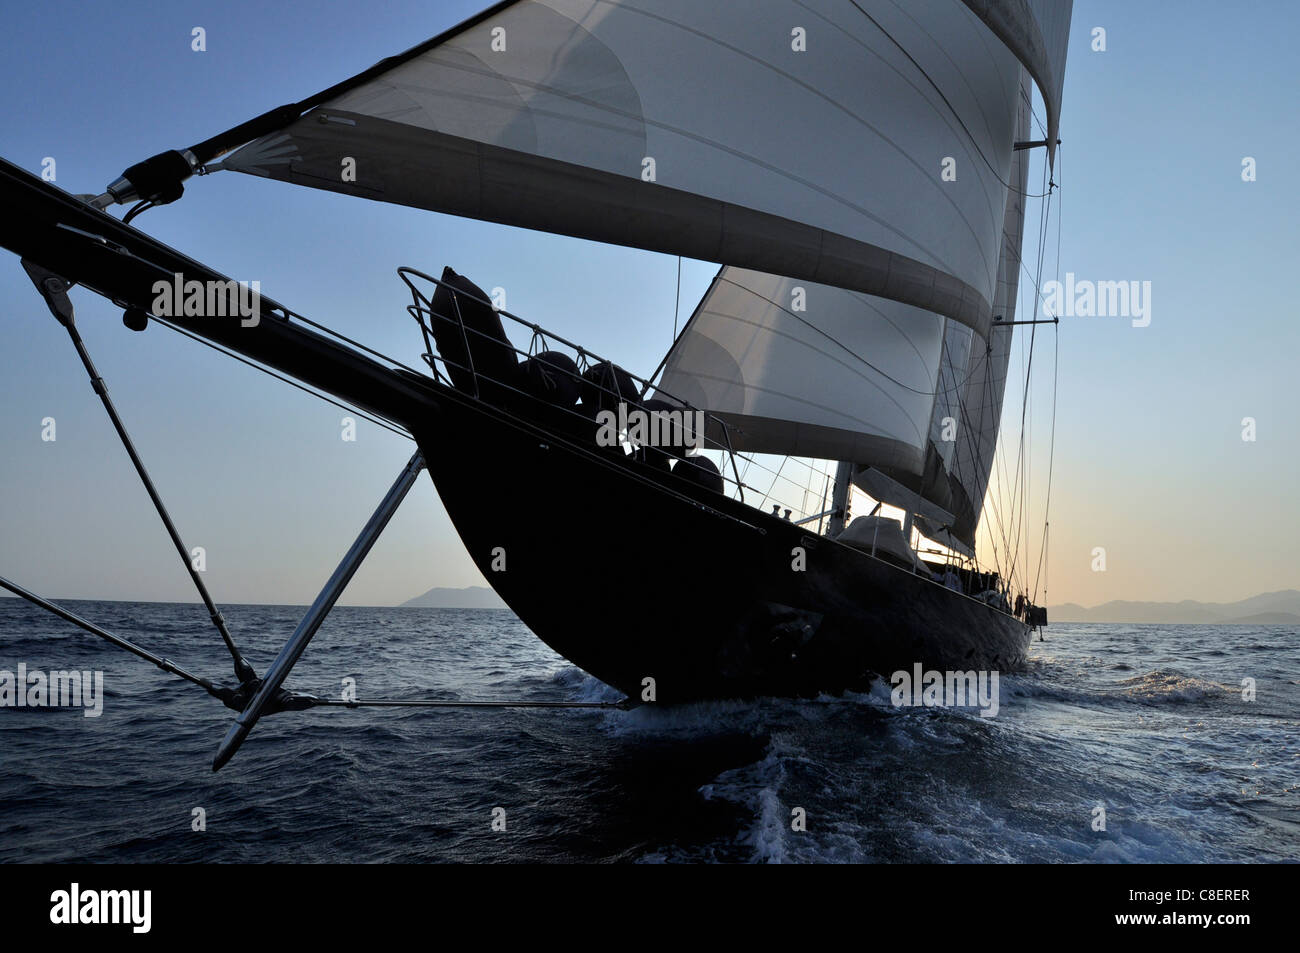 black classic style wooden sailboat, sailing at the Mediterranean sea Stock Photo